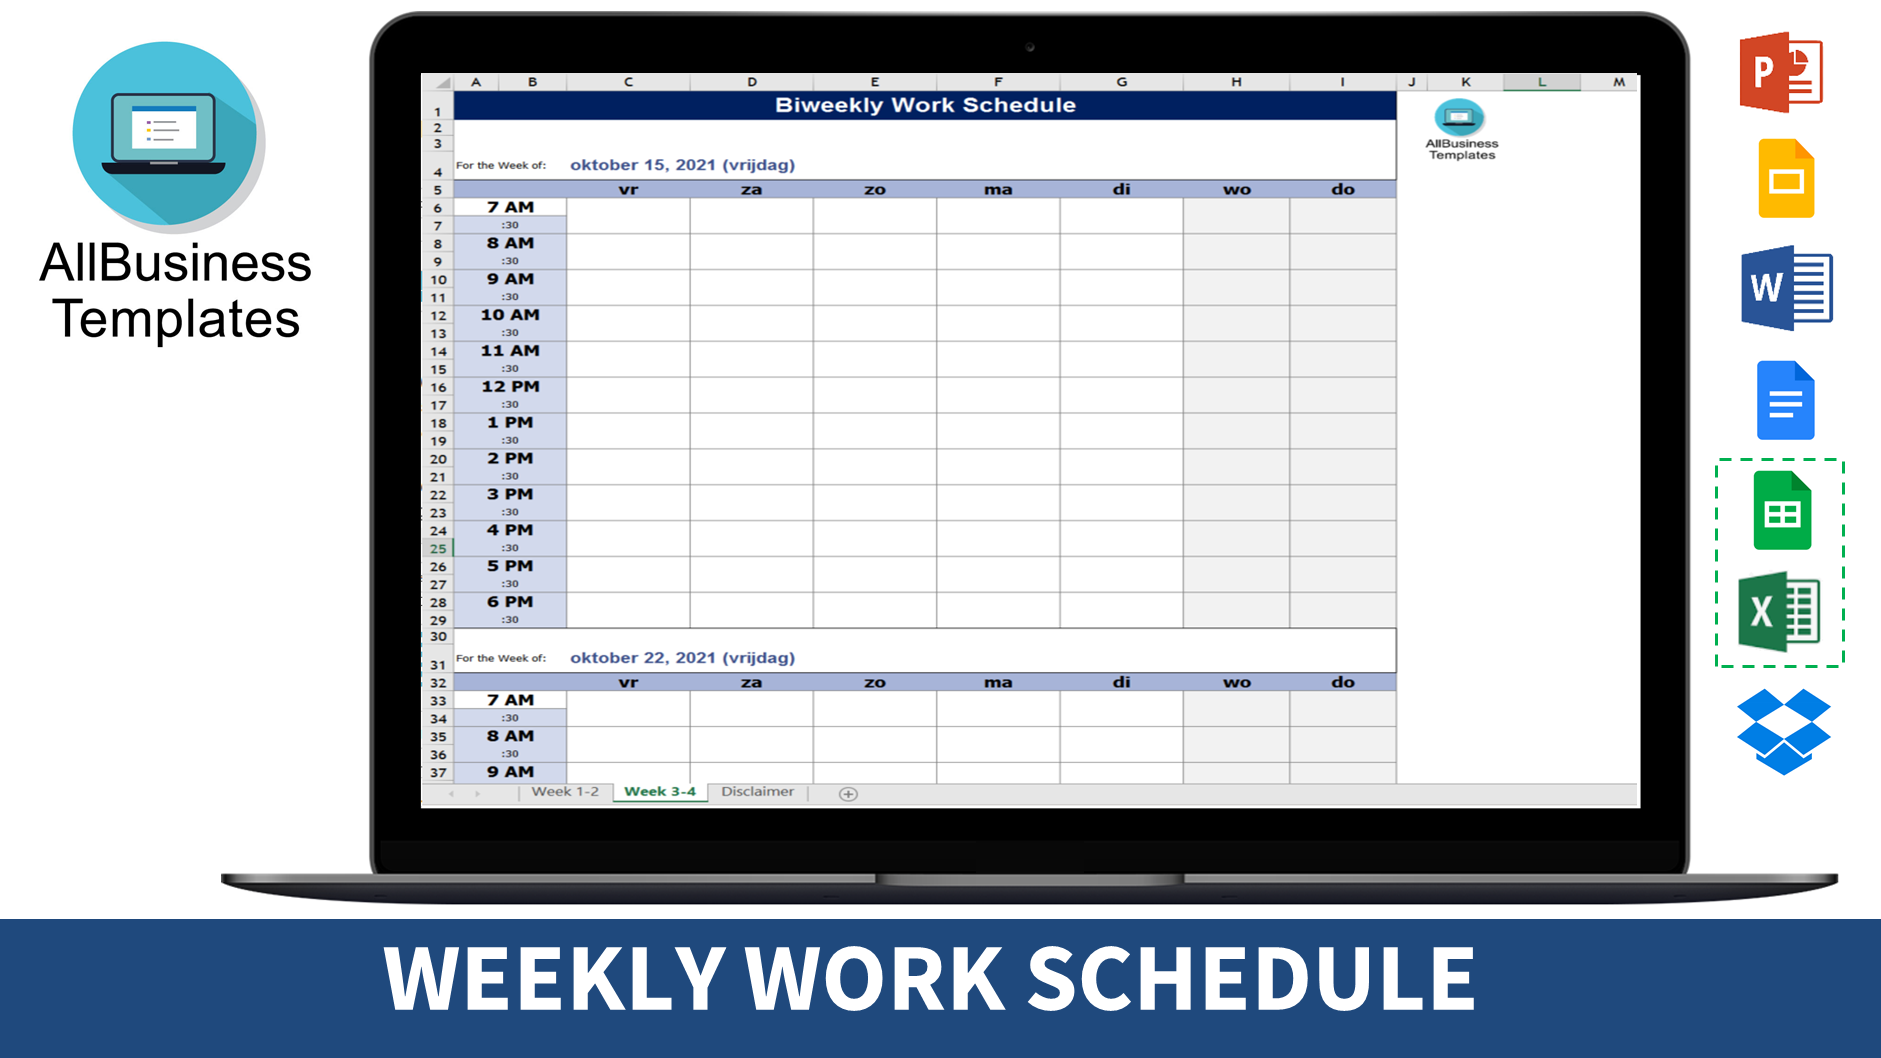 Work Schedule Template main image